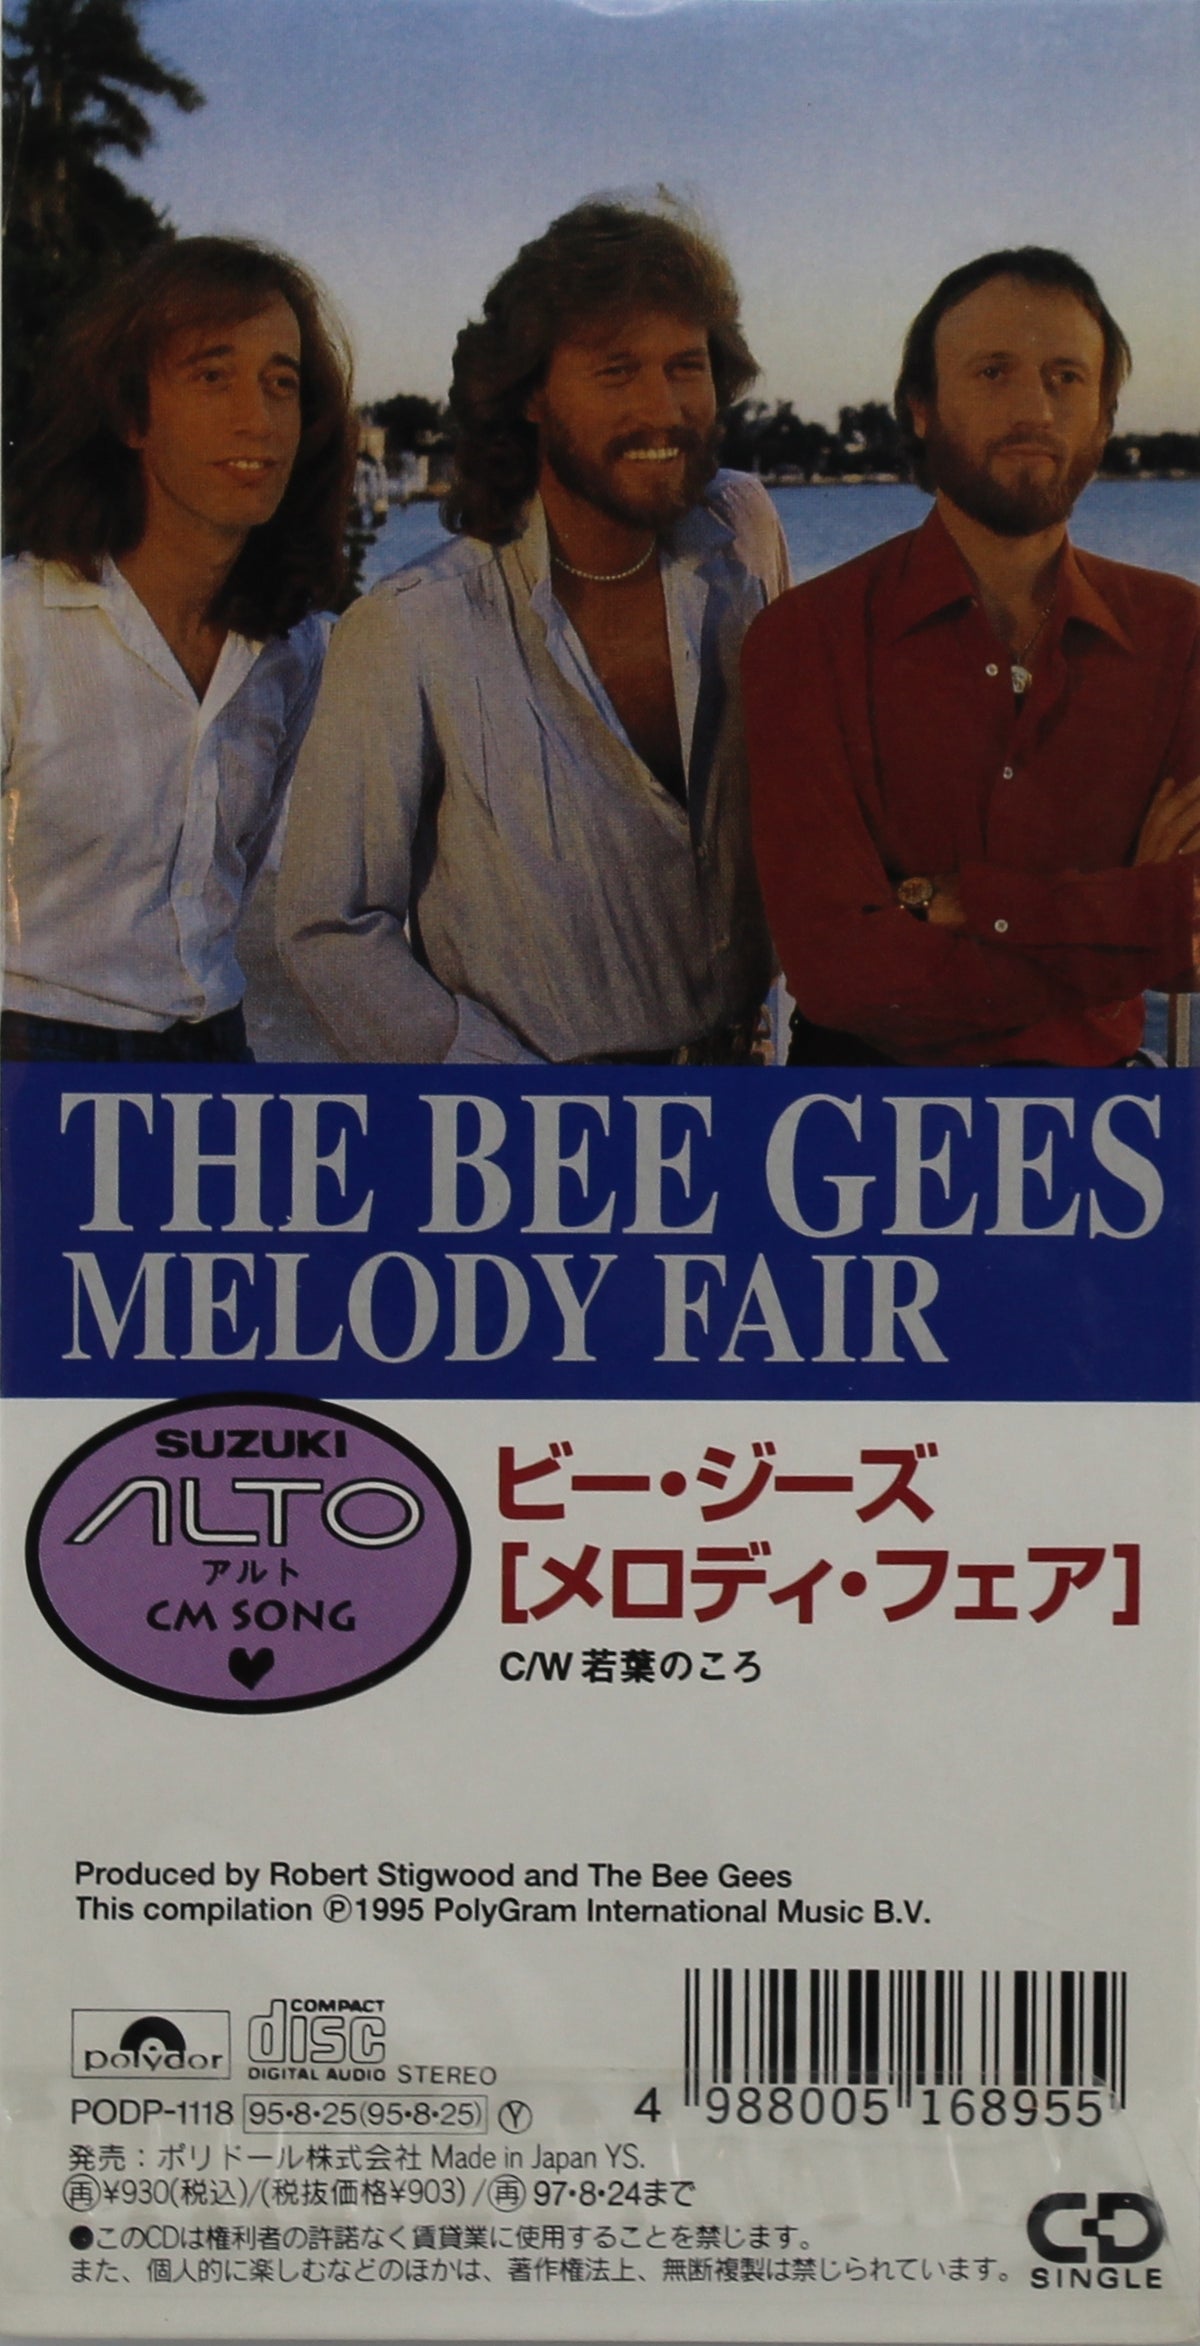 The Bee Gees – Melody Fair, CD, Single, Mini, Japan 1995